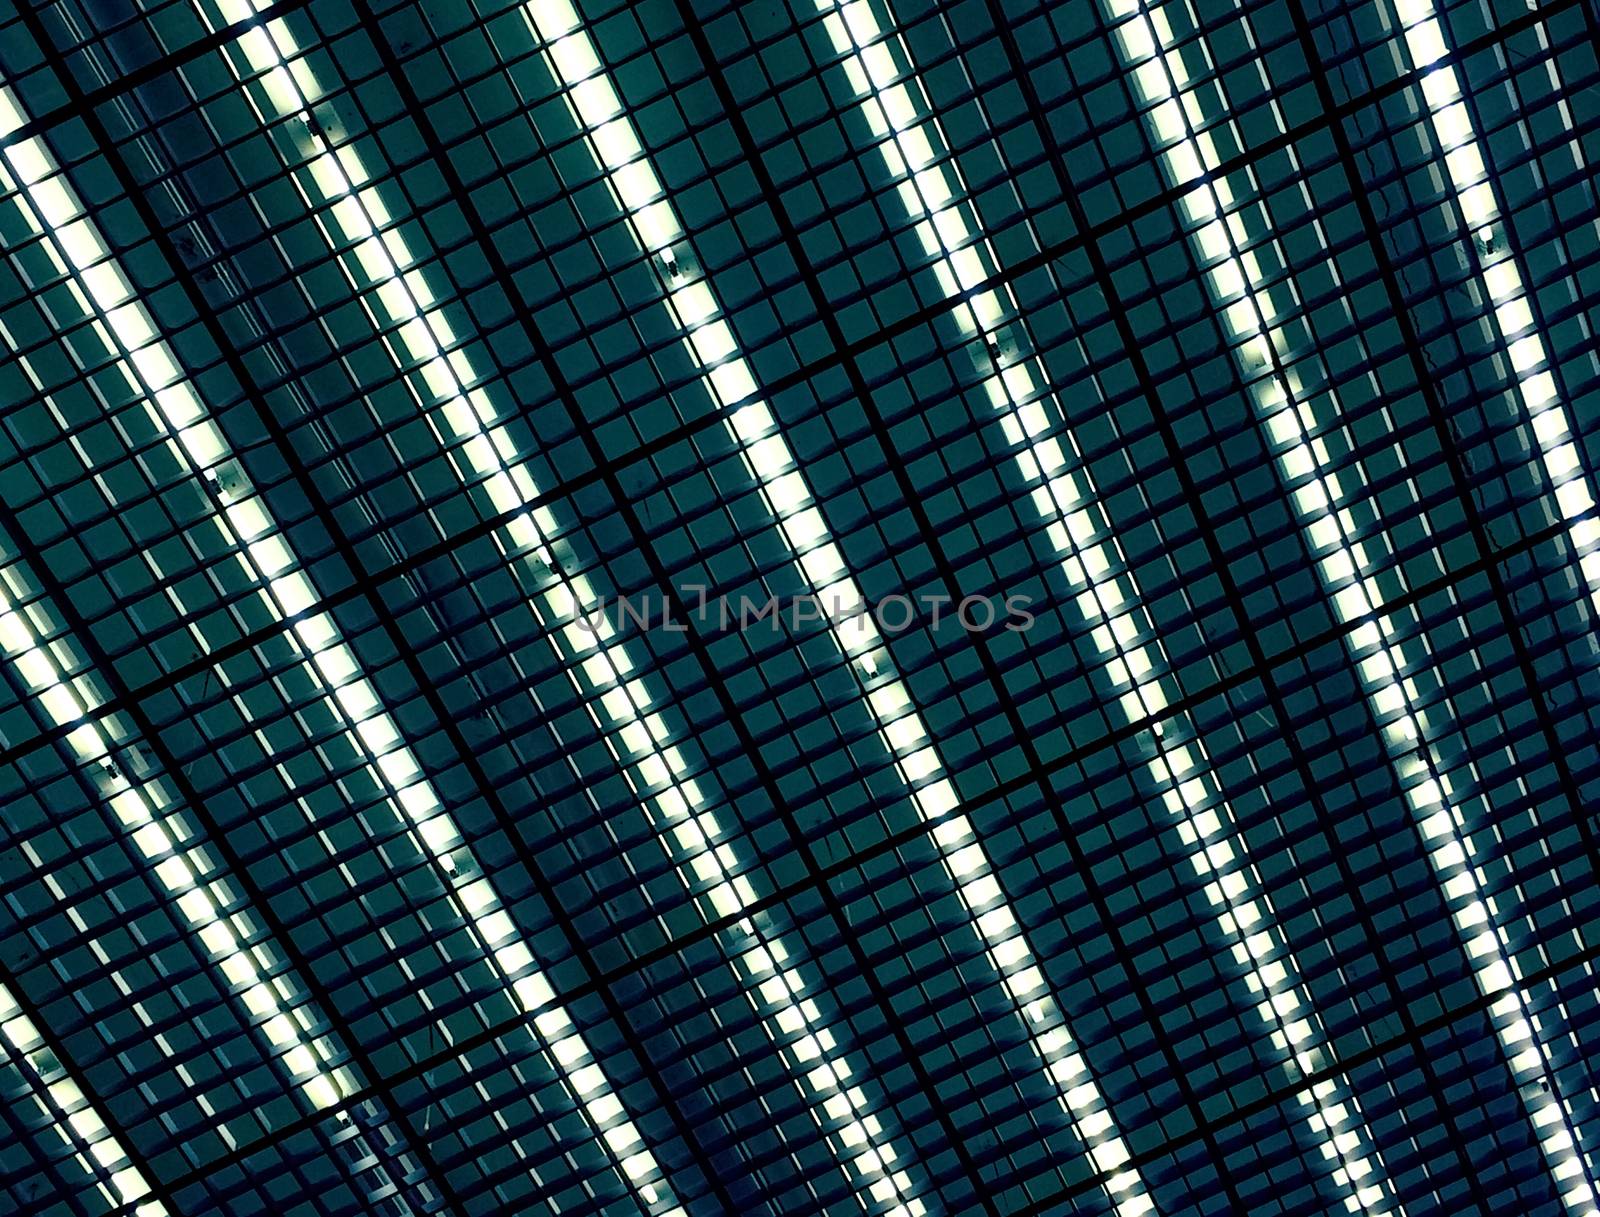 Neon lights in industrial building by anikasalsera